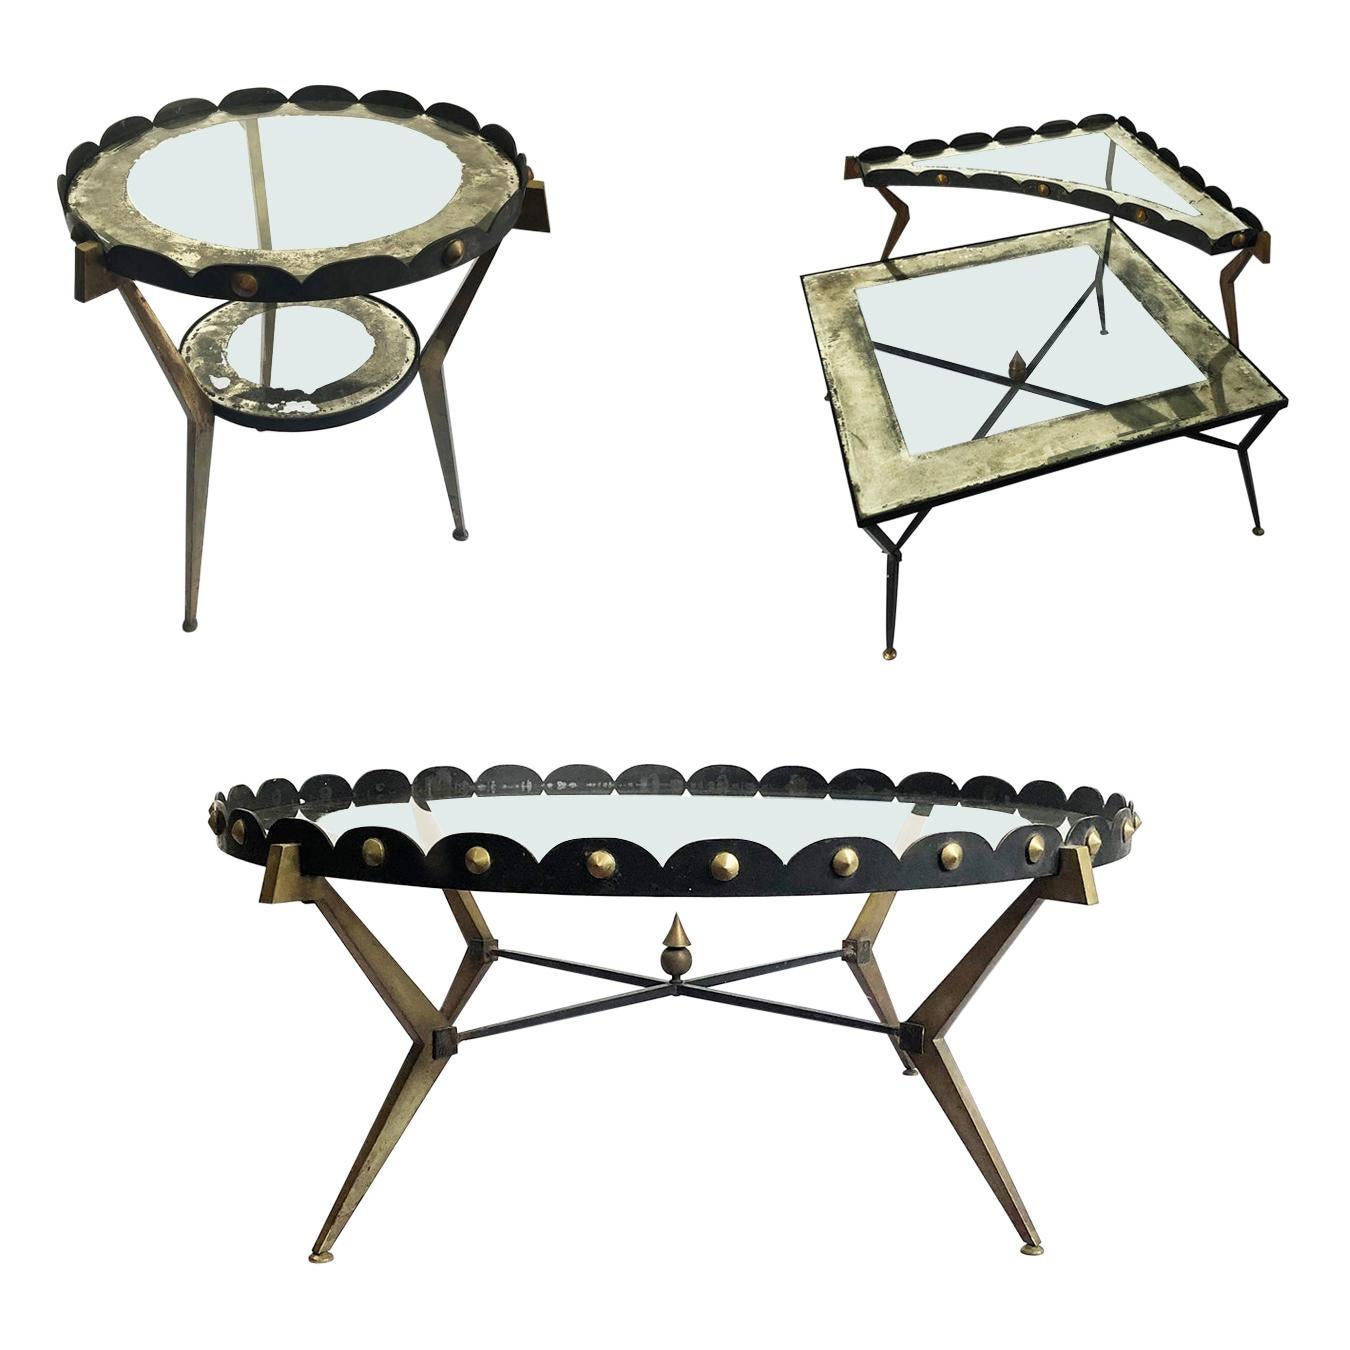 Set of Three Original Amazing Tables Designed by Arturo Pani